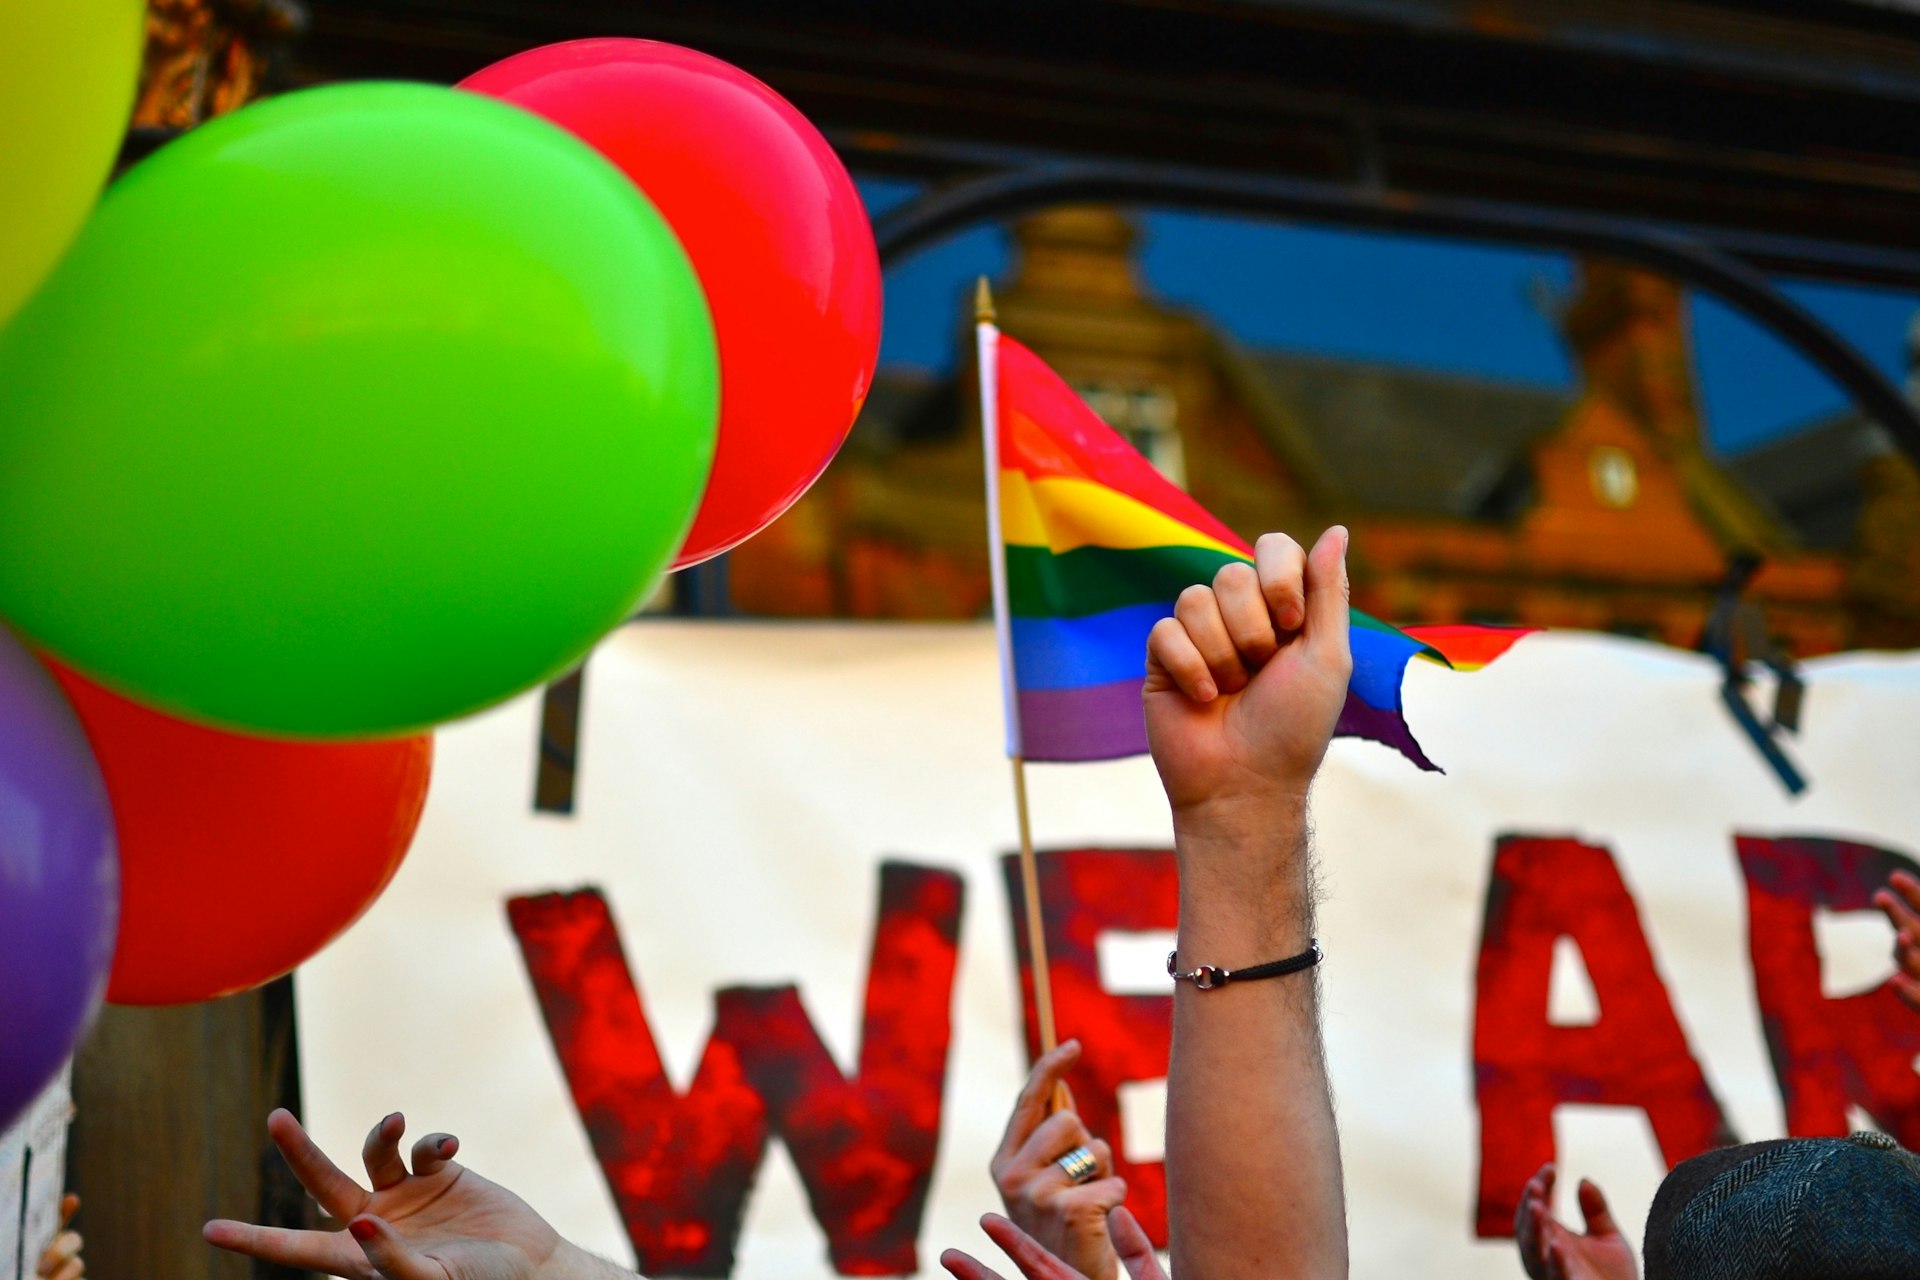 North Carolina has passed the "most anti-LGBT bill" in the U.S.